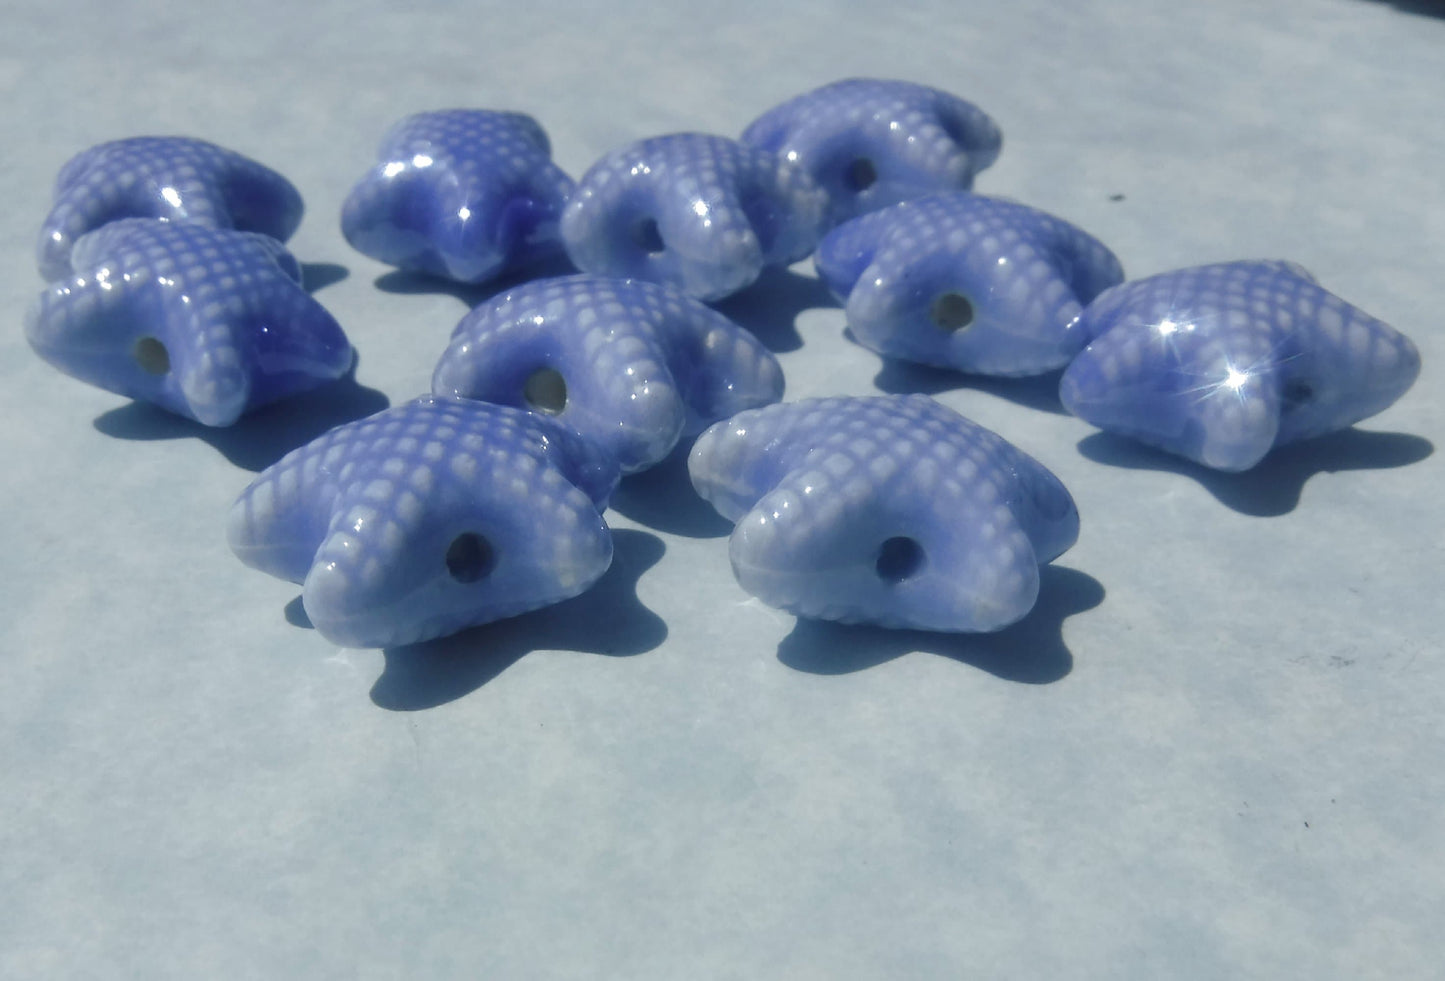 Periwinkle Blue Starfish Beads - Ceramic Mosaic Tiles - 10 Puffy Beads - Sea Stars